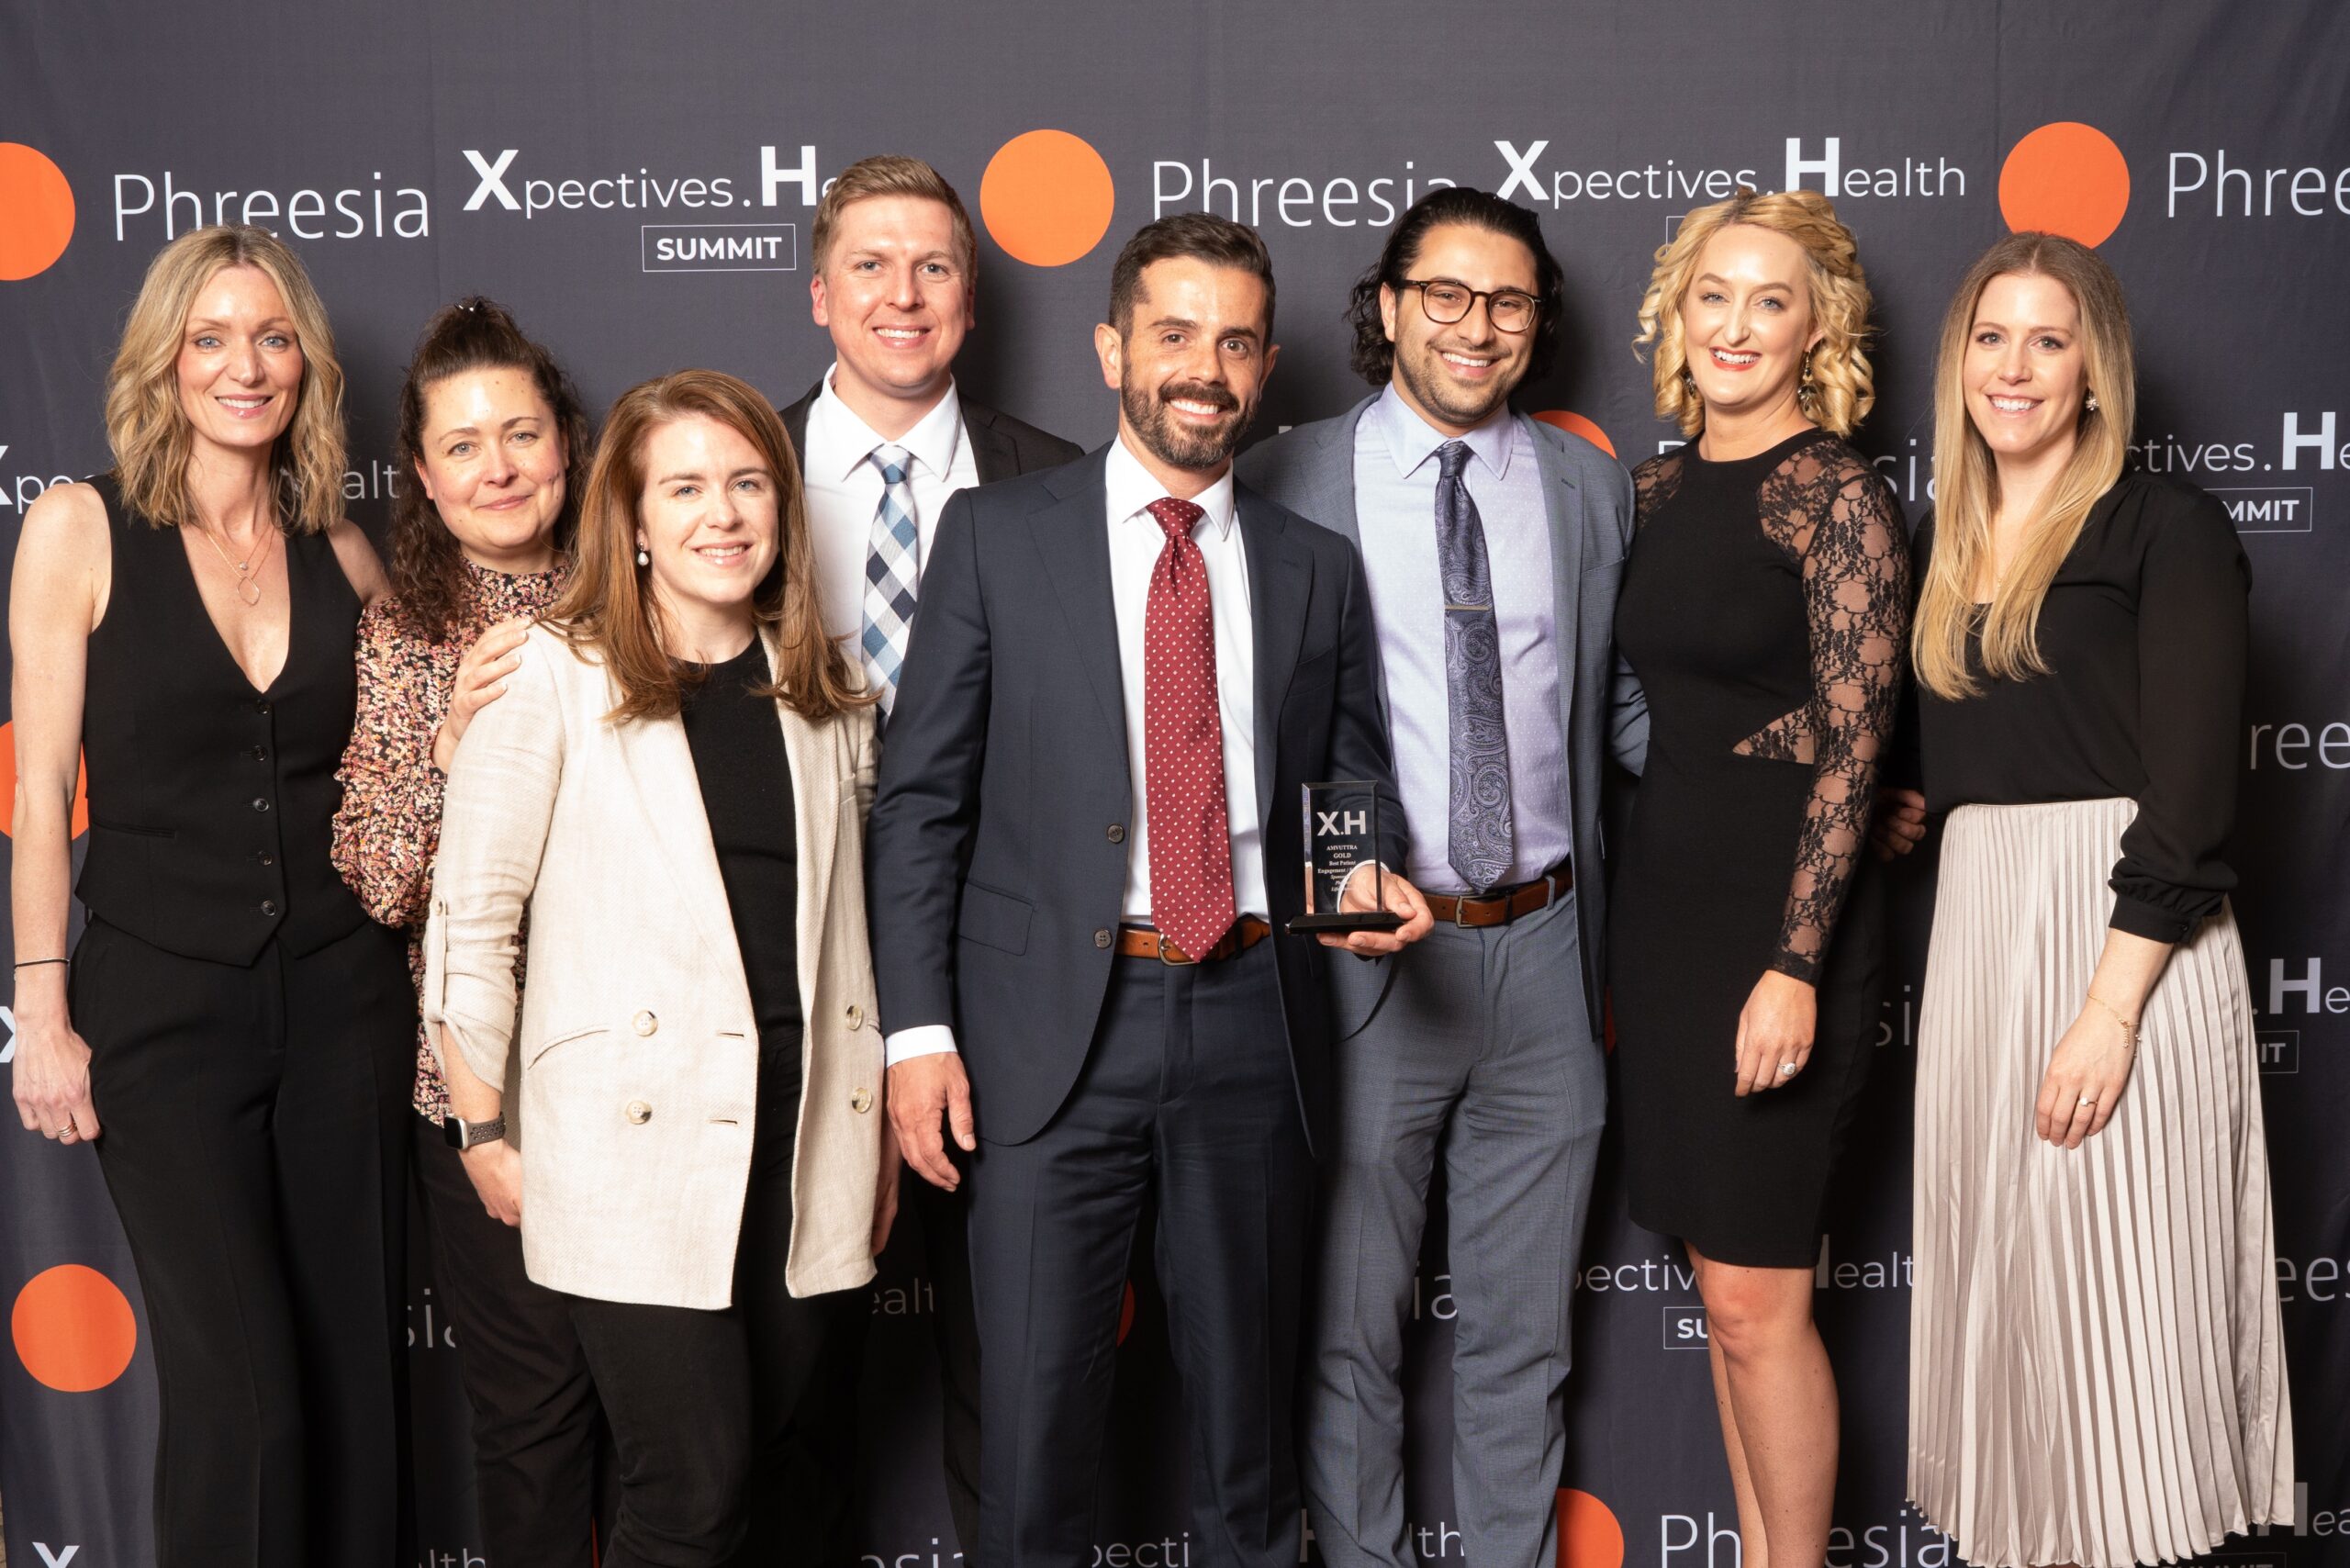 Questex Announces the 2021 Fierce Pharma Marketing Awards Winners